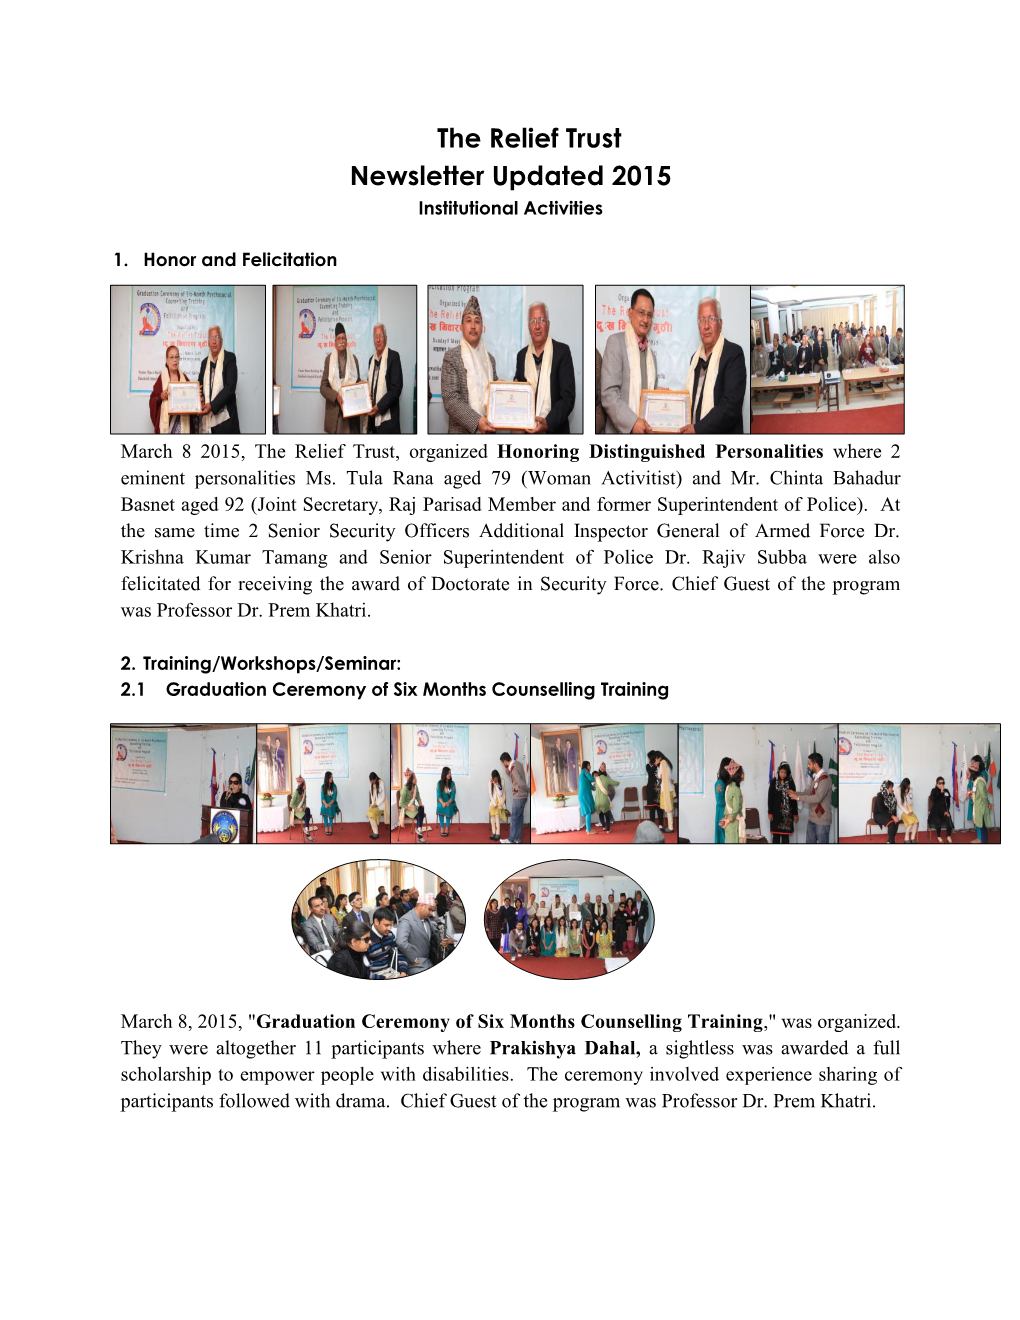 The Relief Trust Newsletter Updated 2015 Institutional Activities